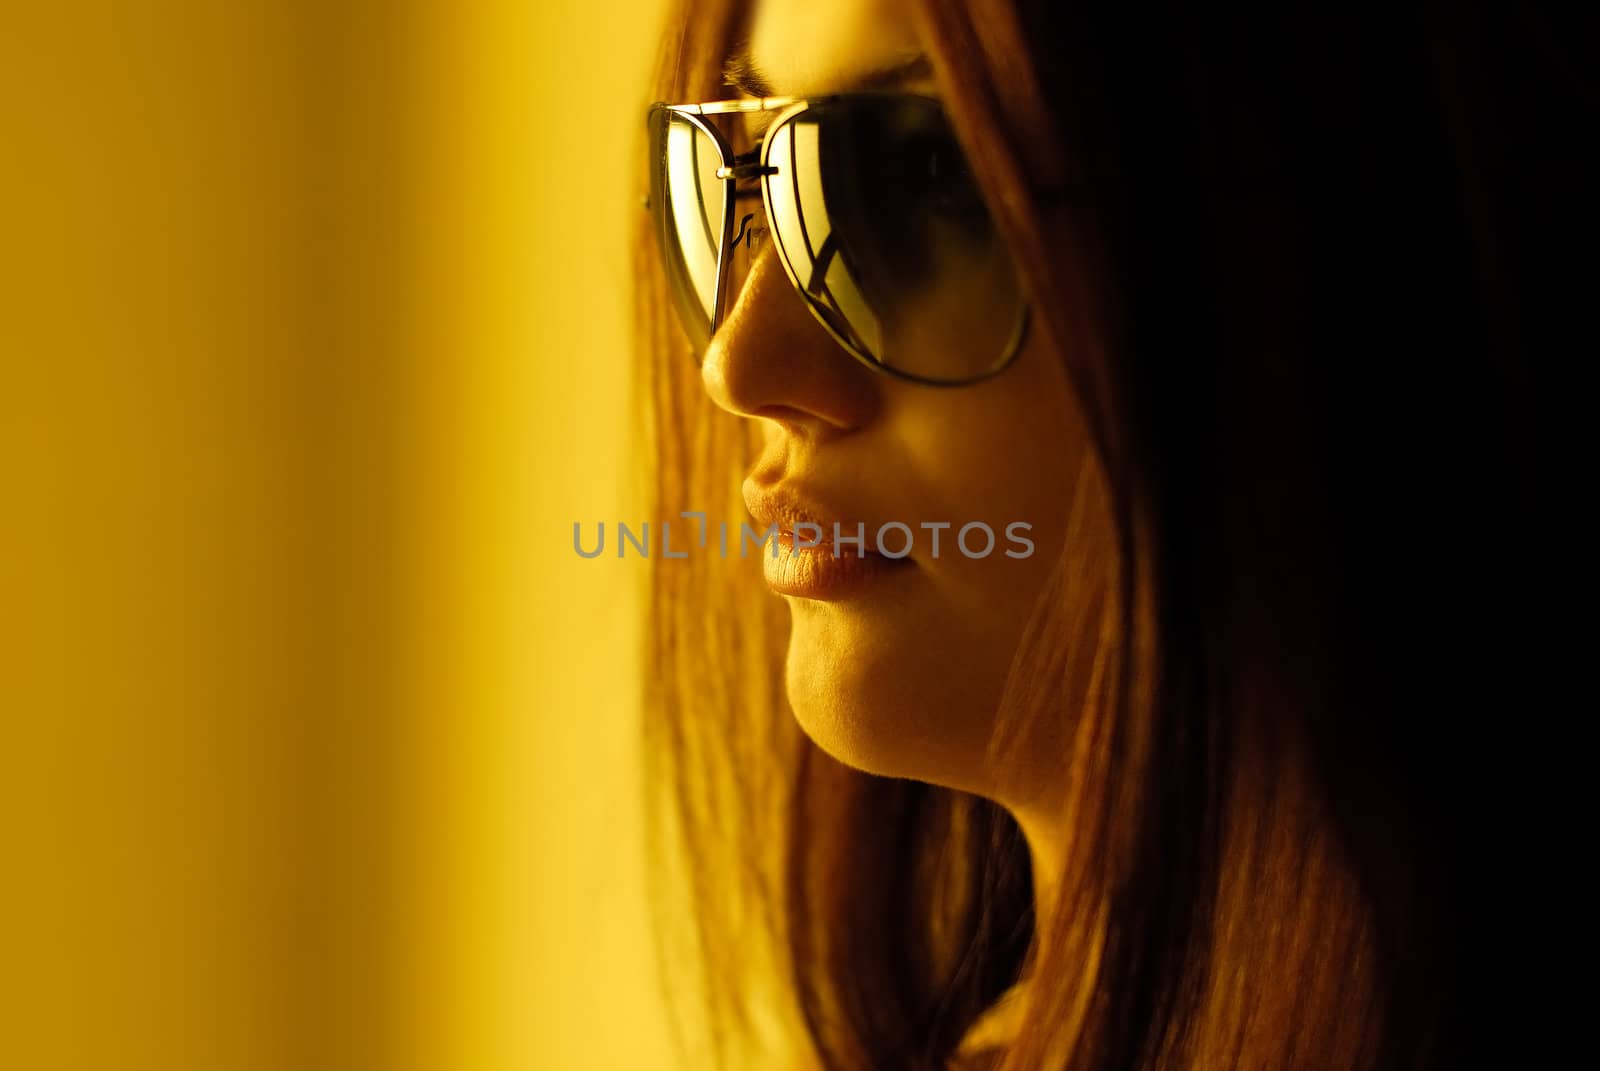 Beautiful Woman wearing glasses - looks like cinema scene